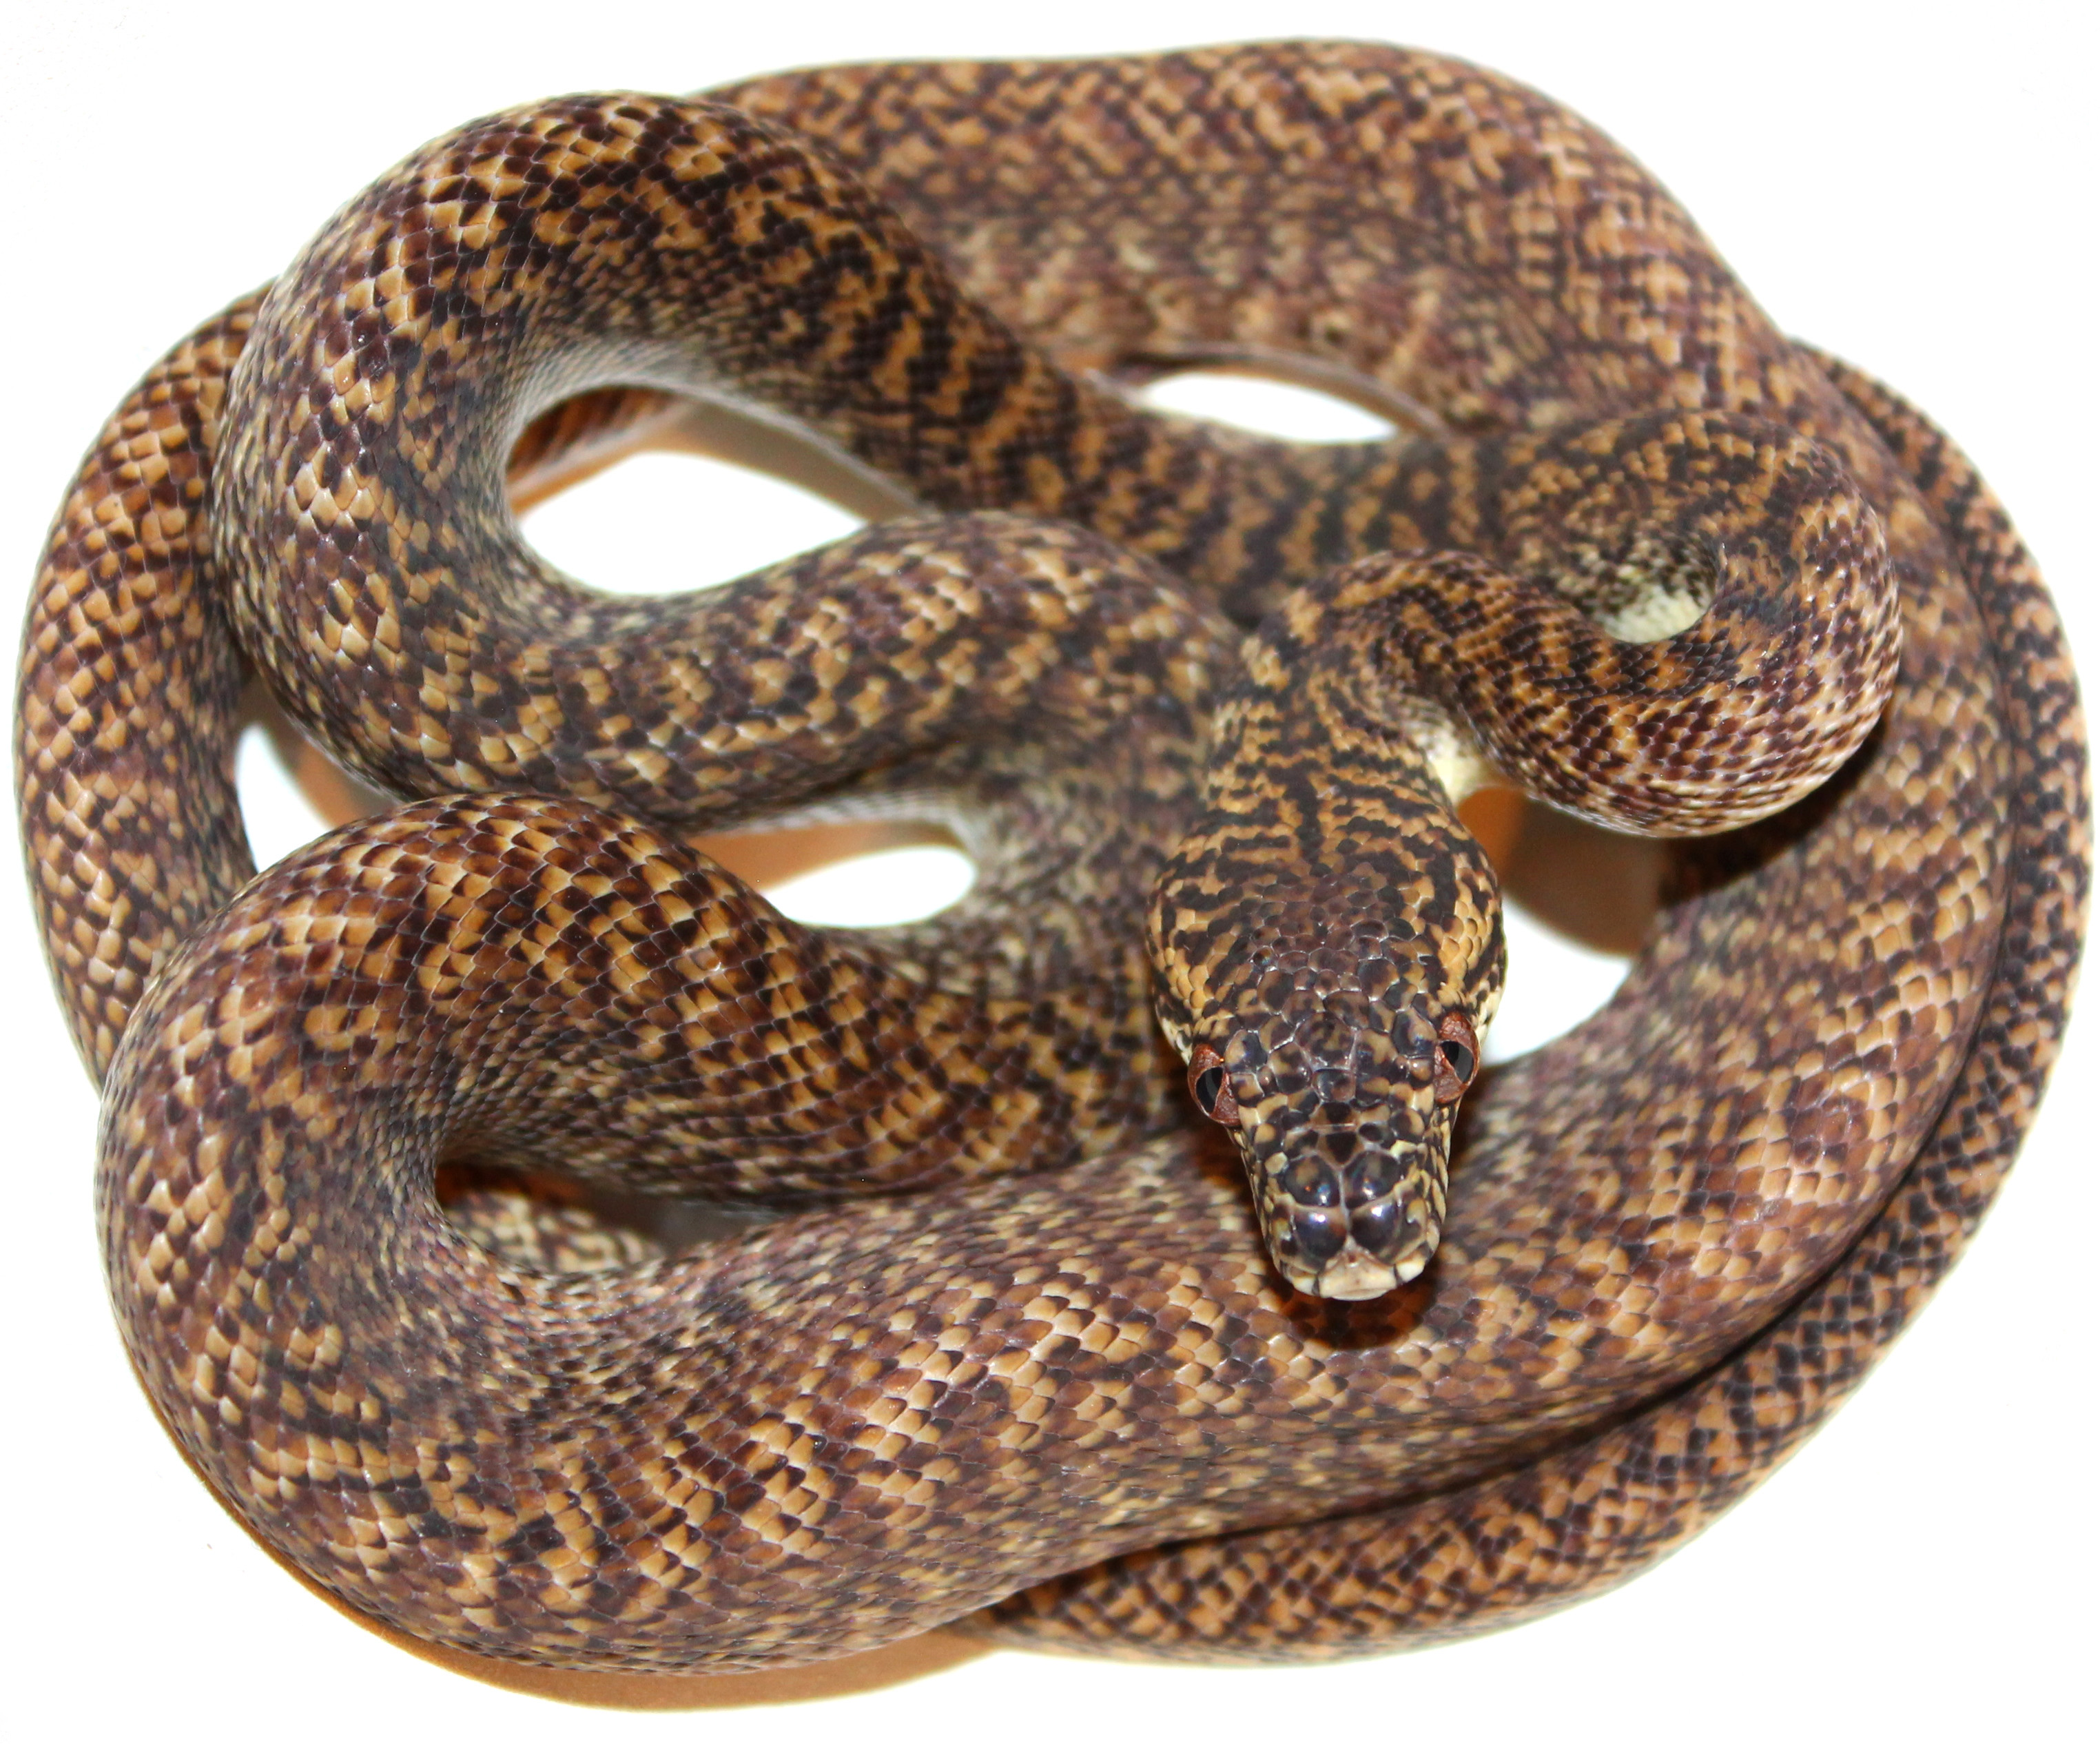 Granite Irian Jaya Carpet Python by Inland Reptile